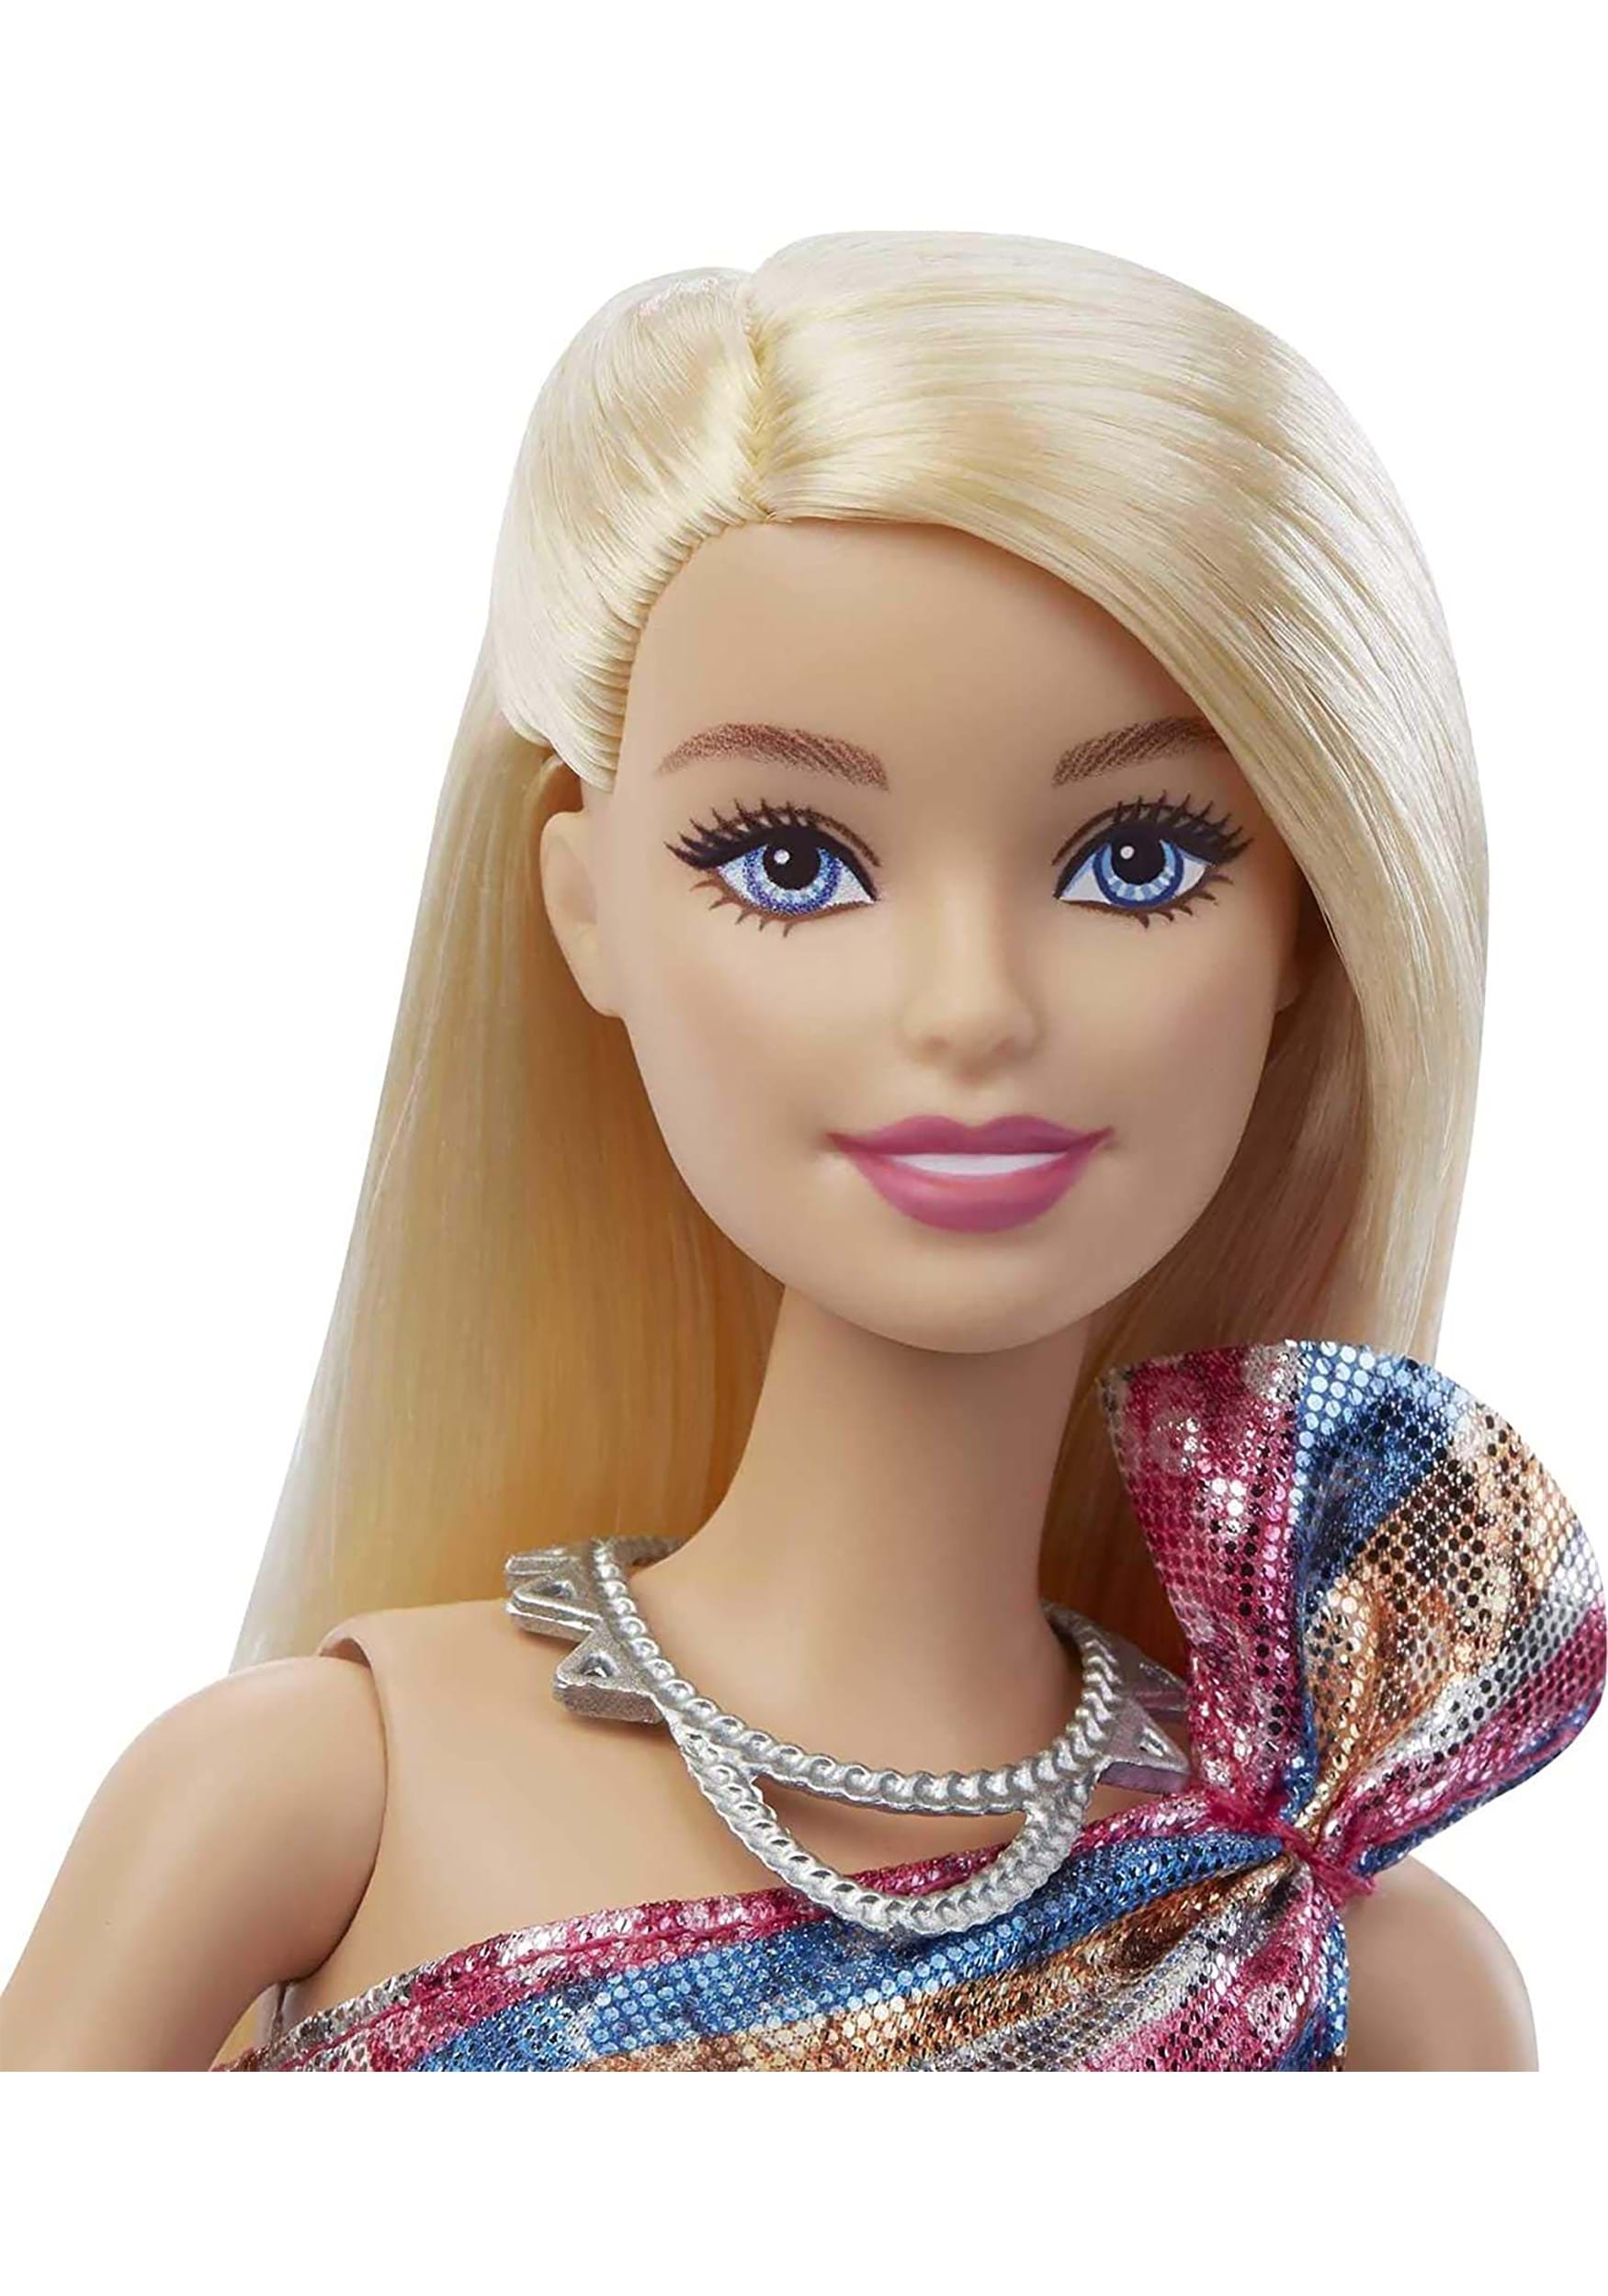 Barbie Dream Big Tumbler - 24 oz